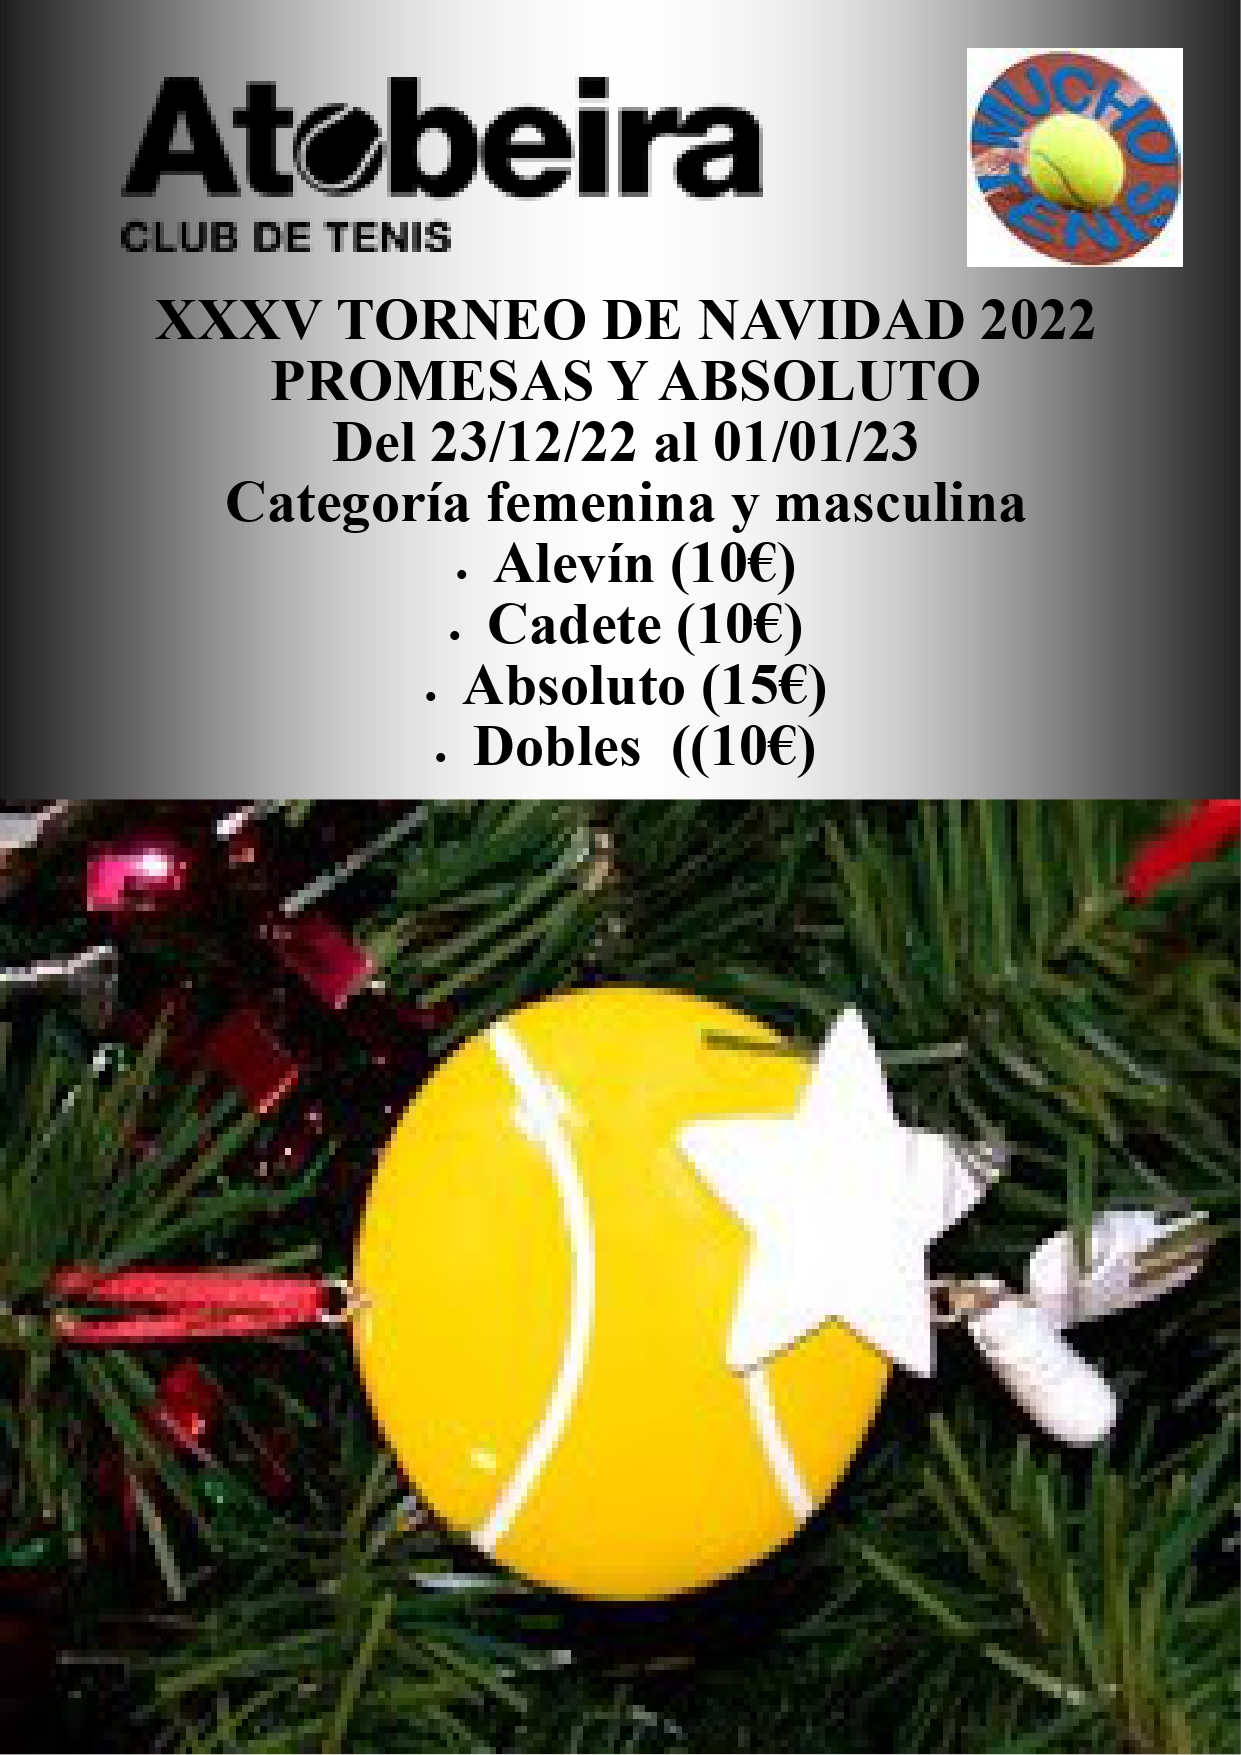 XXXV Torneo de Navidad Promesas / Absoluto A Tobeira 2022